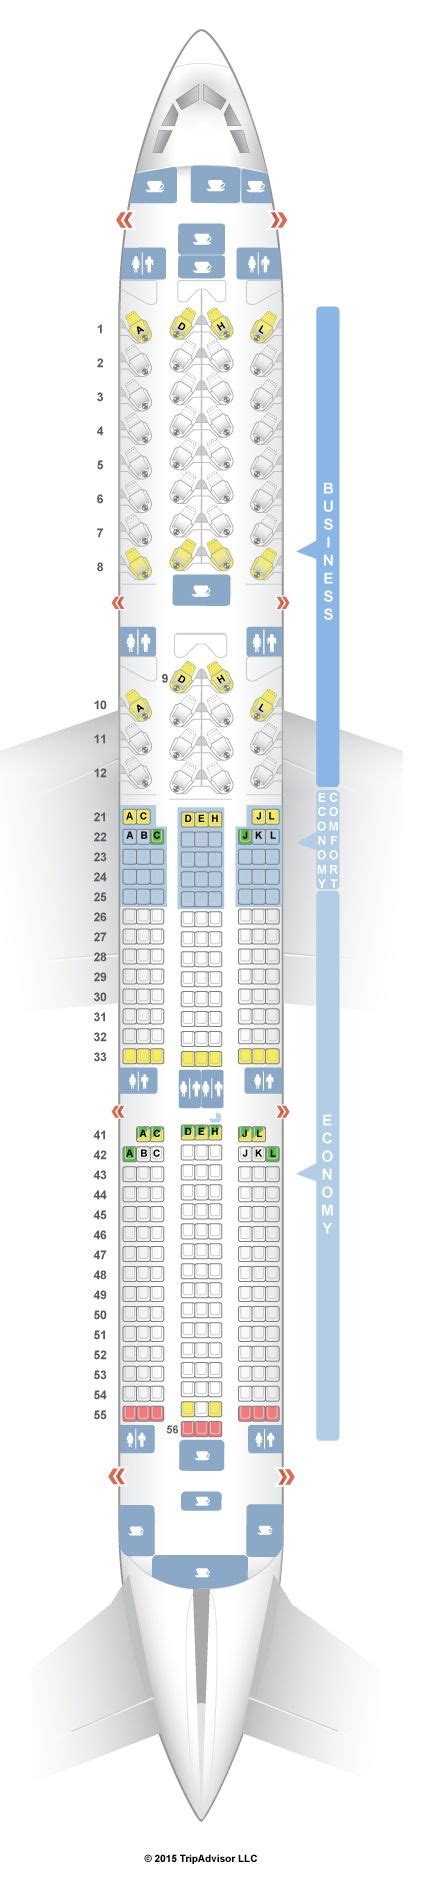 Seatguru Seat Map Finnair Airbus A350 900 350 Seatguru Map Airbus